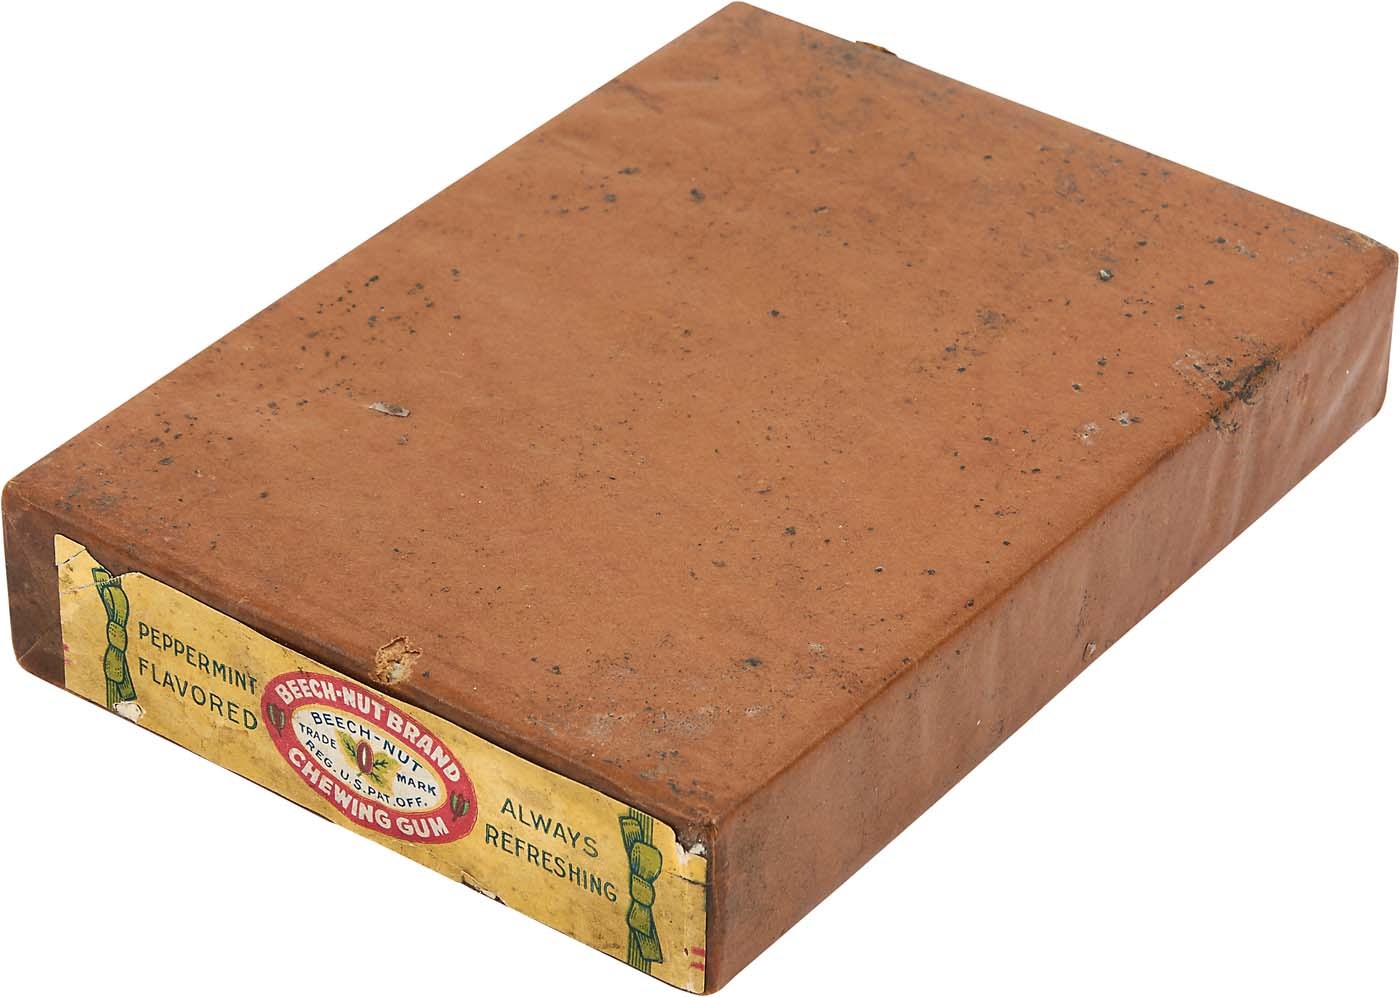 1930s Beechnut Gum Box SEALED with Individual Packs